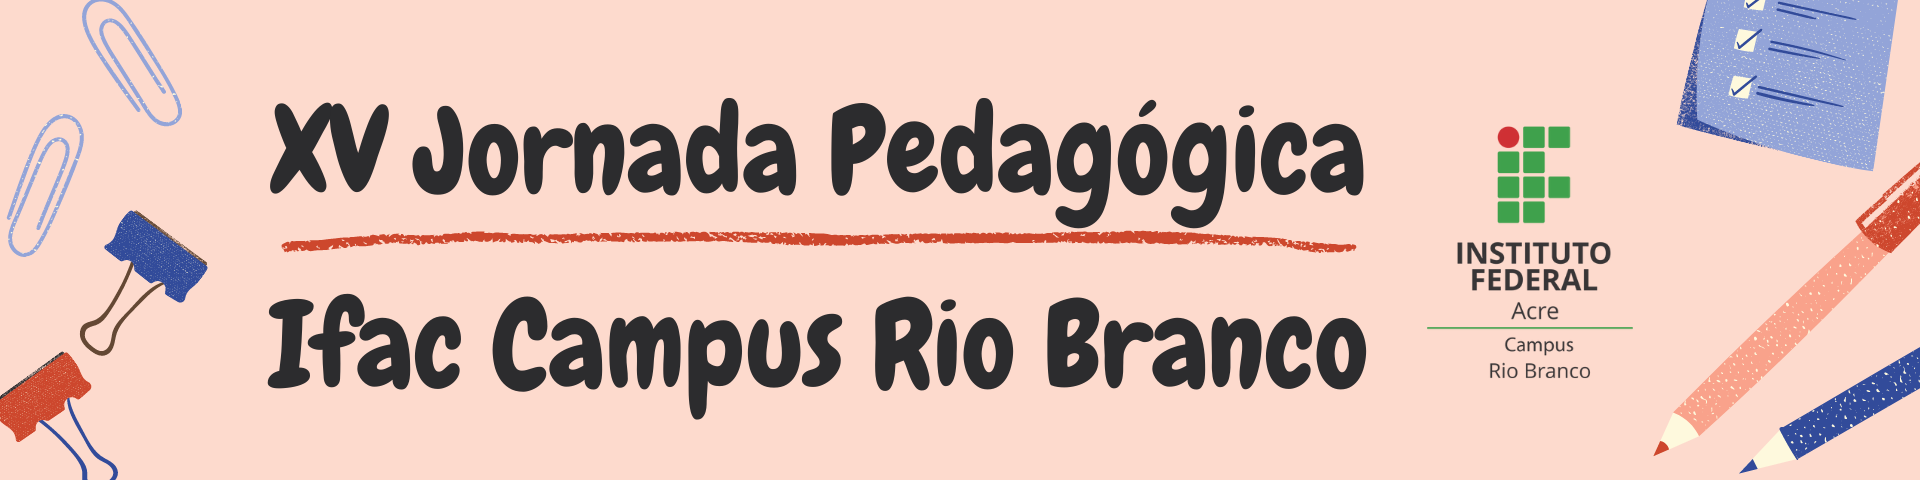 XV Jornada Pedagógica do Ifac Campus Rio Branco (2022.1)